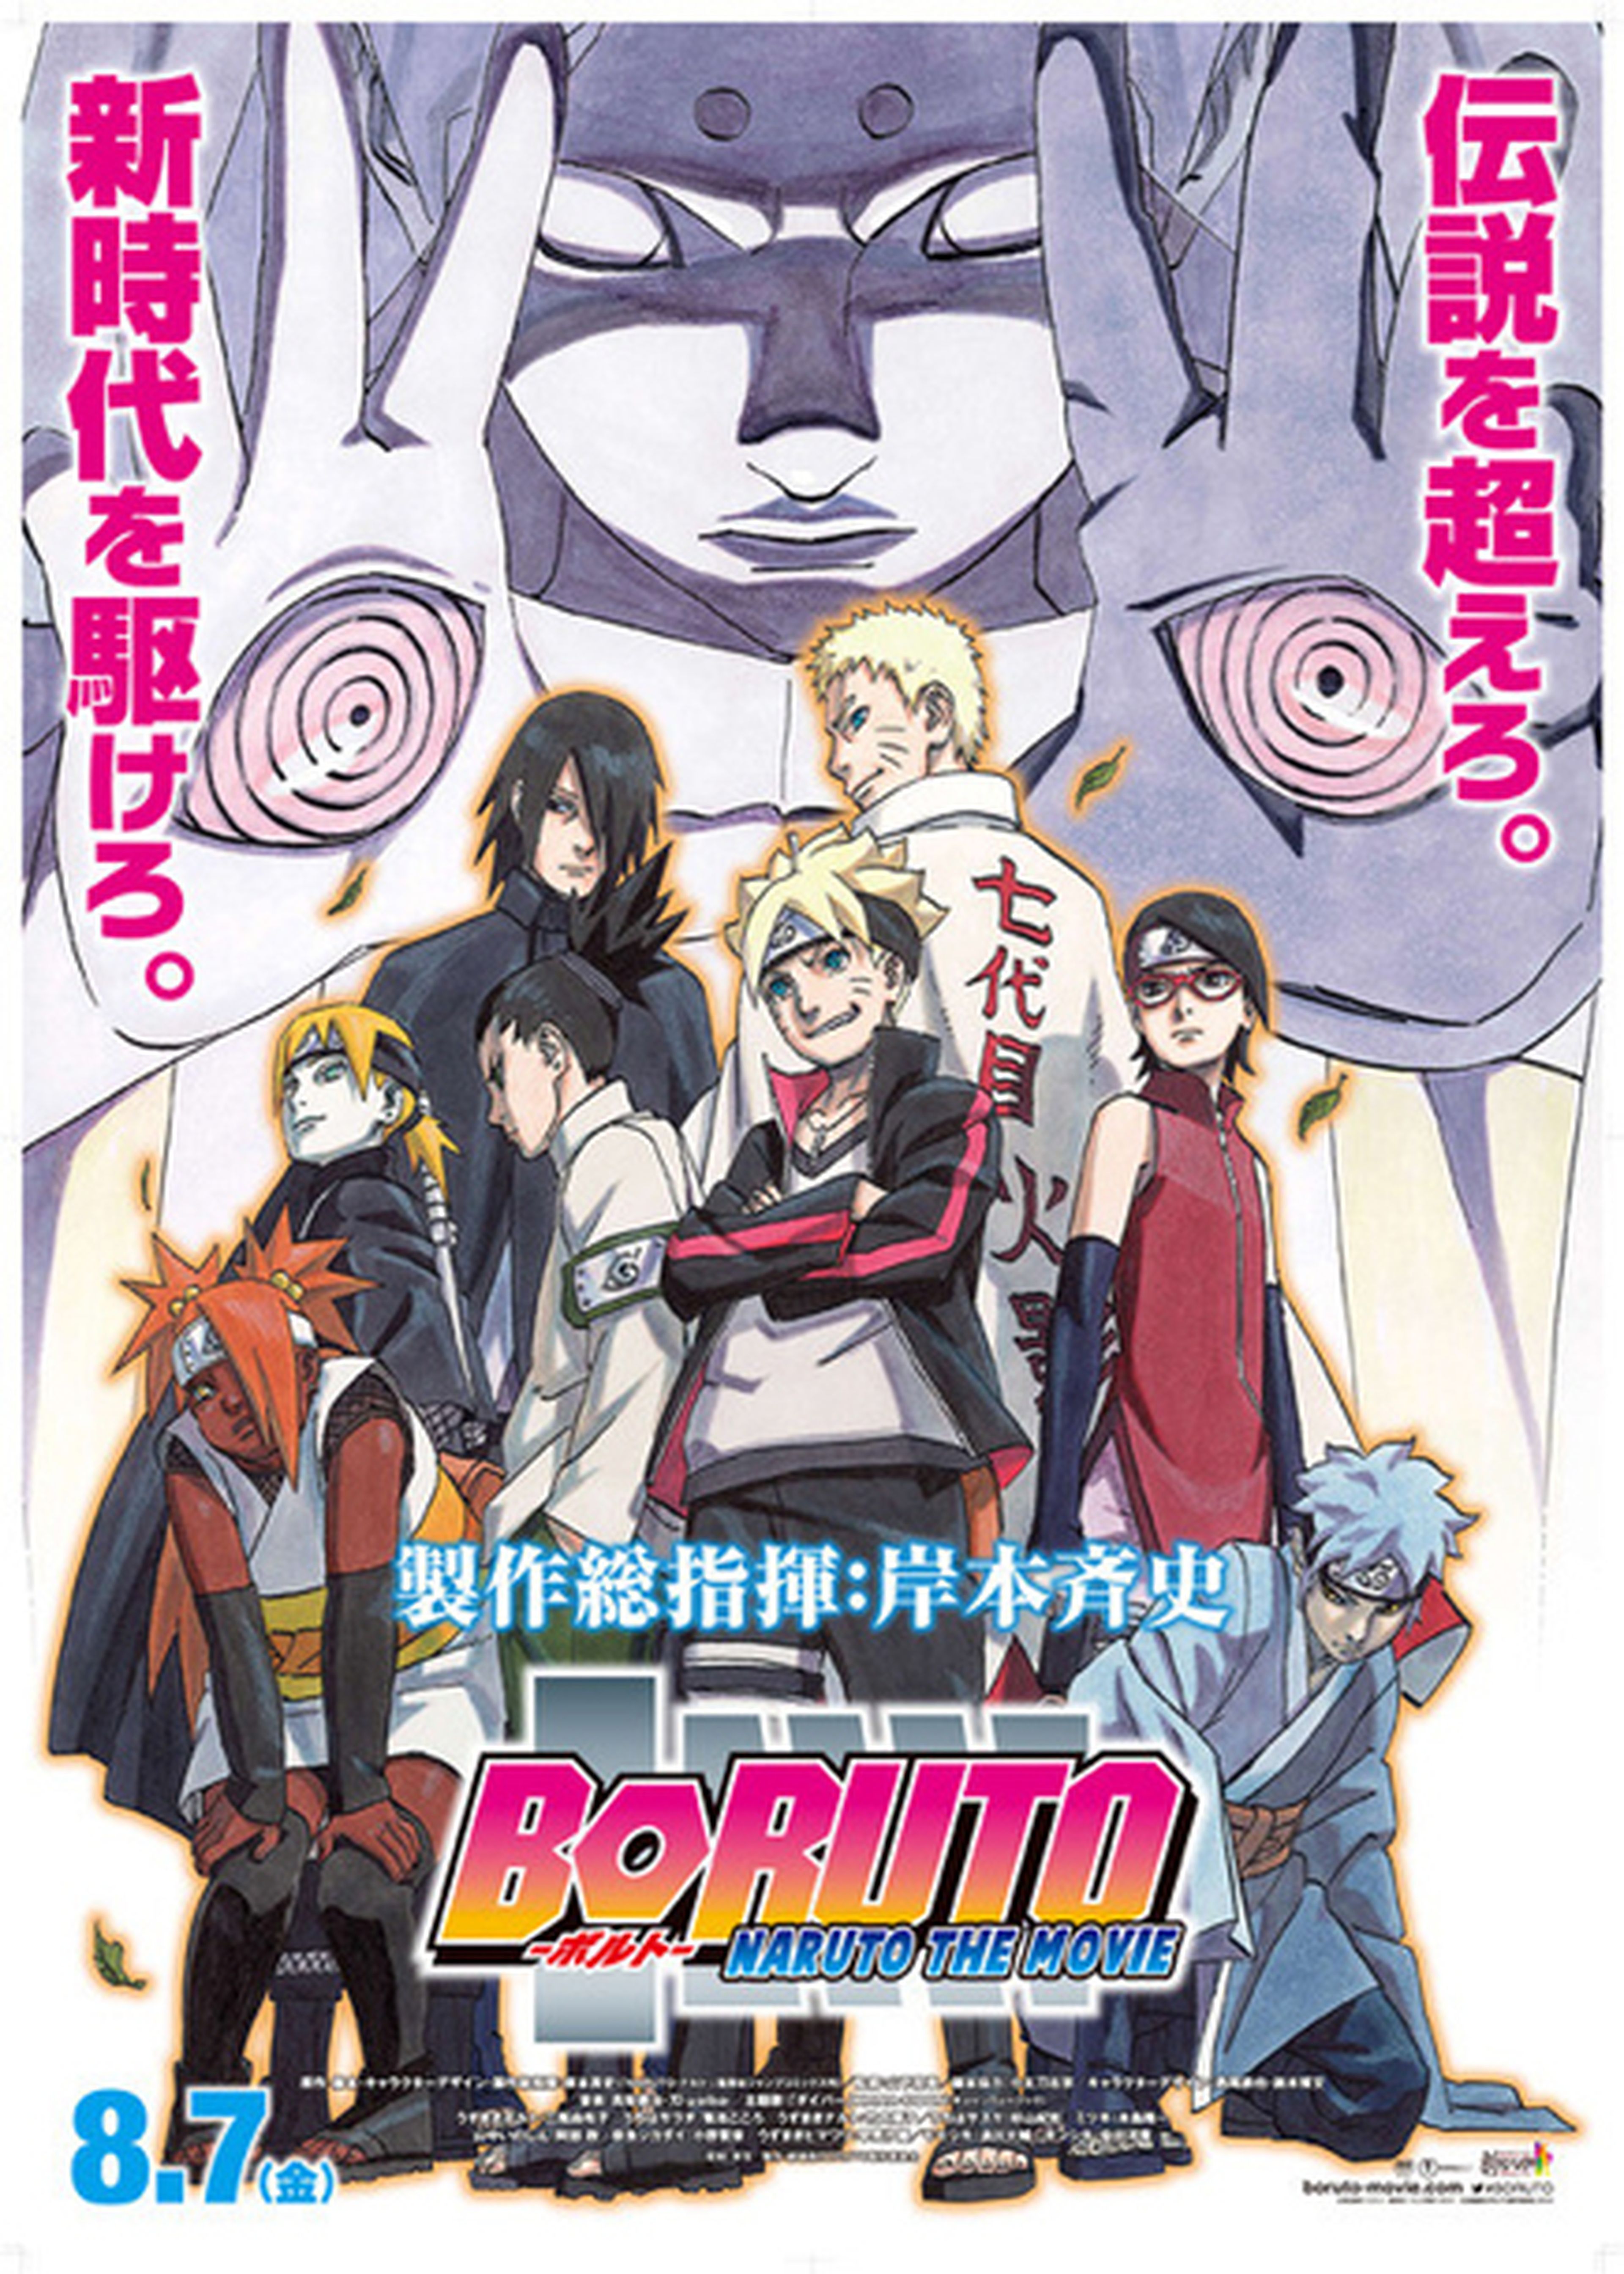 Boruto -Naruto the Movie-: los espectadores se llevarán un one-shot especial